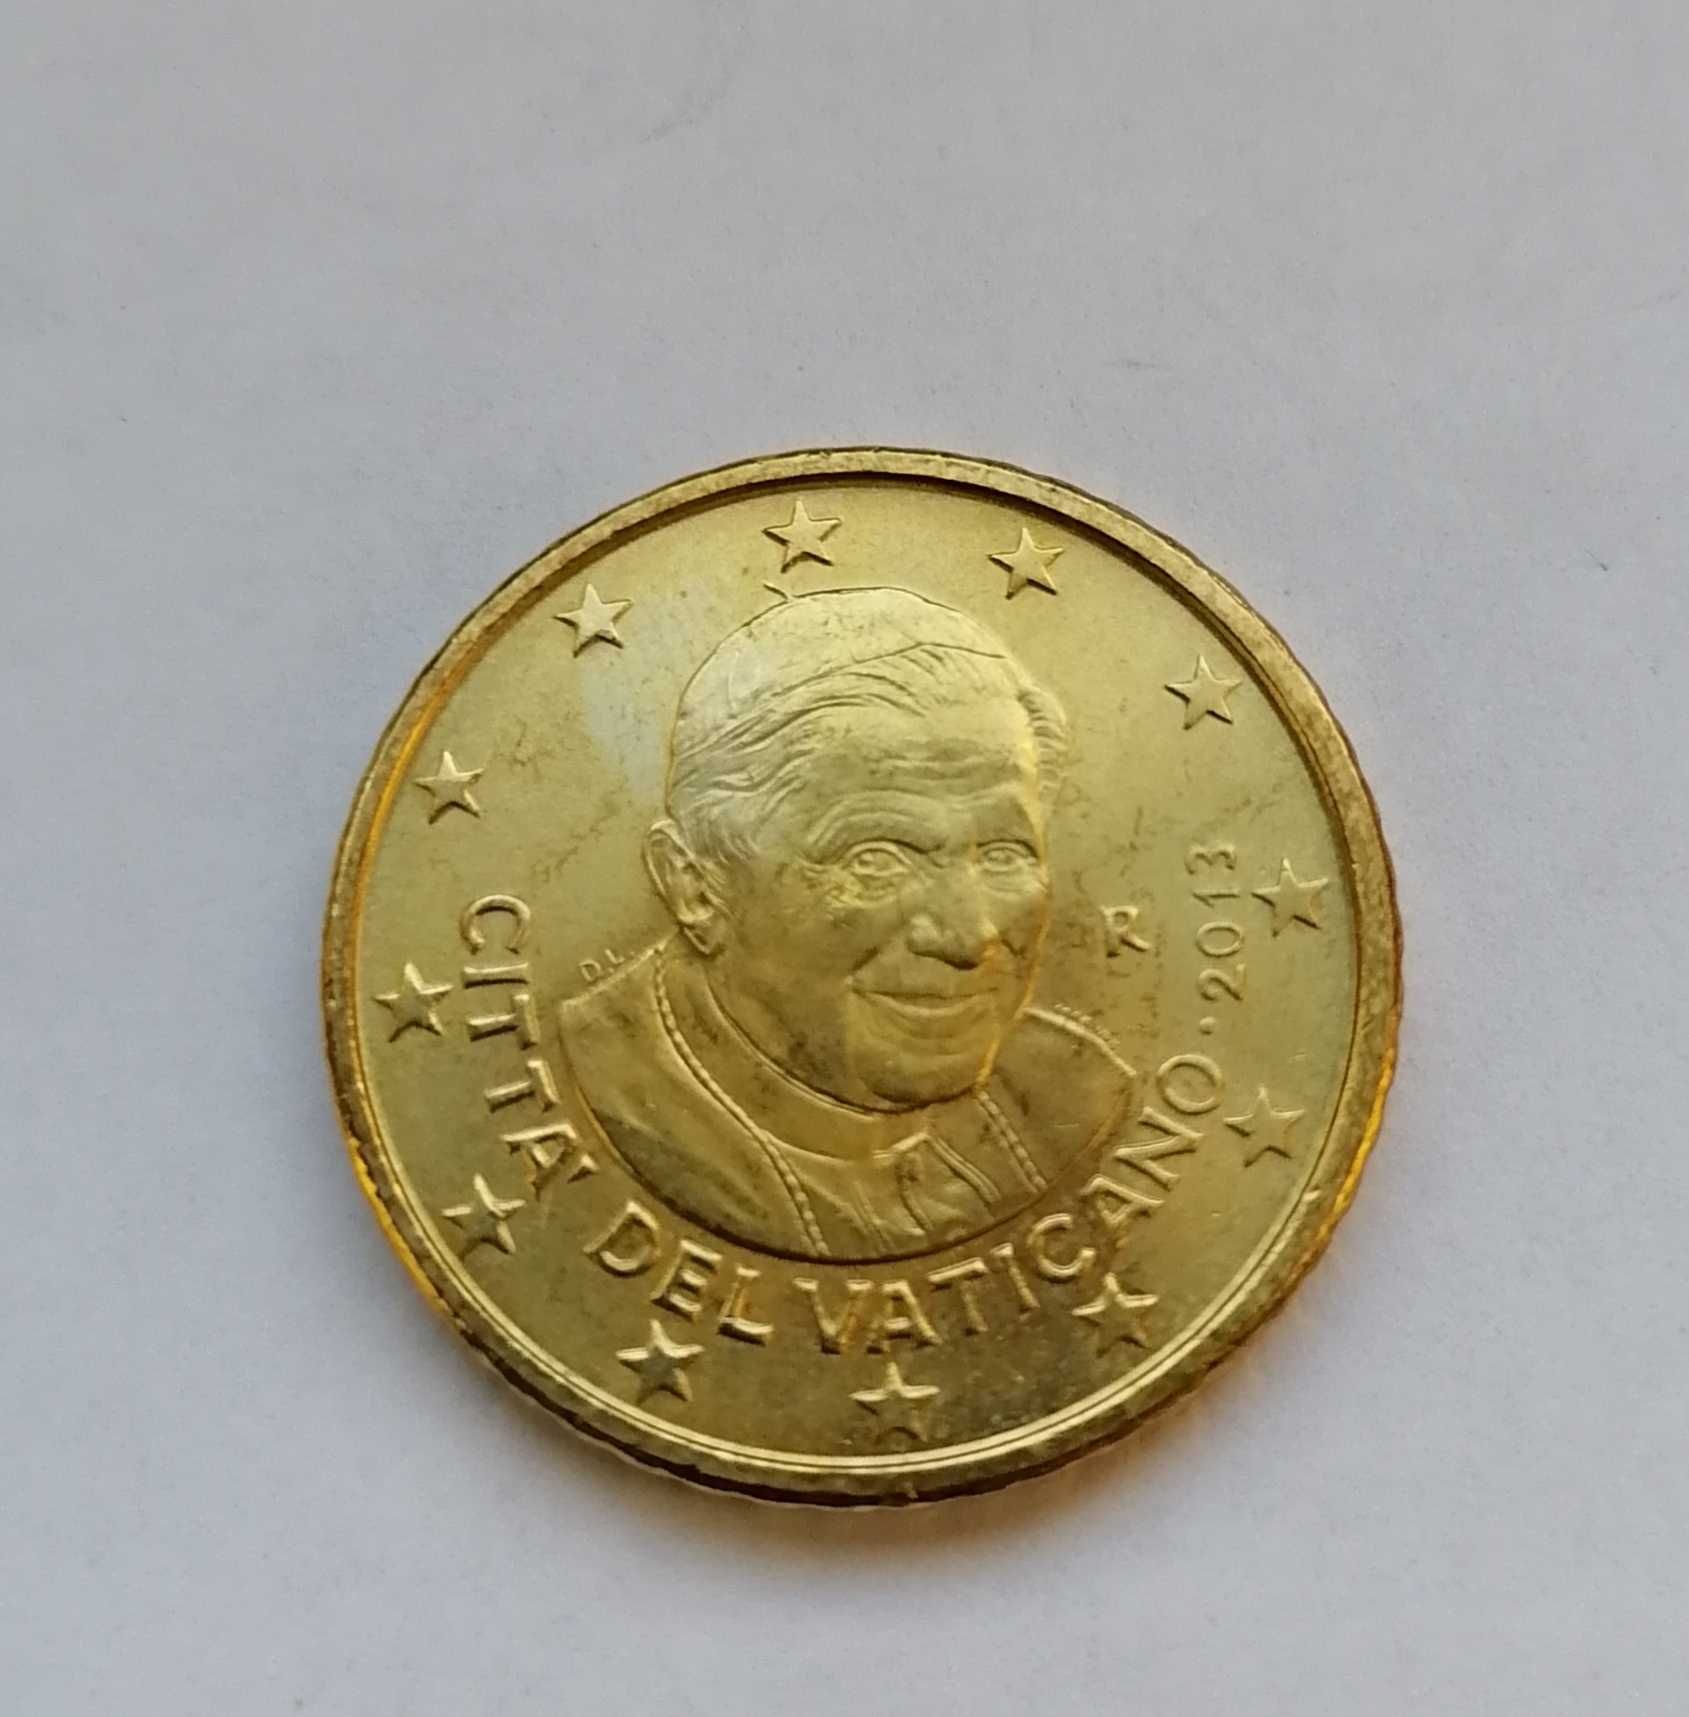 2 moedas italianas L 500 / 50 cêntimos vaticano 2013